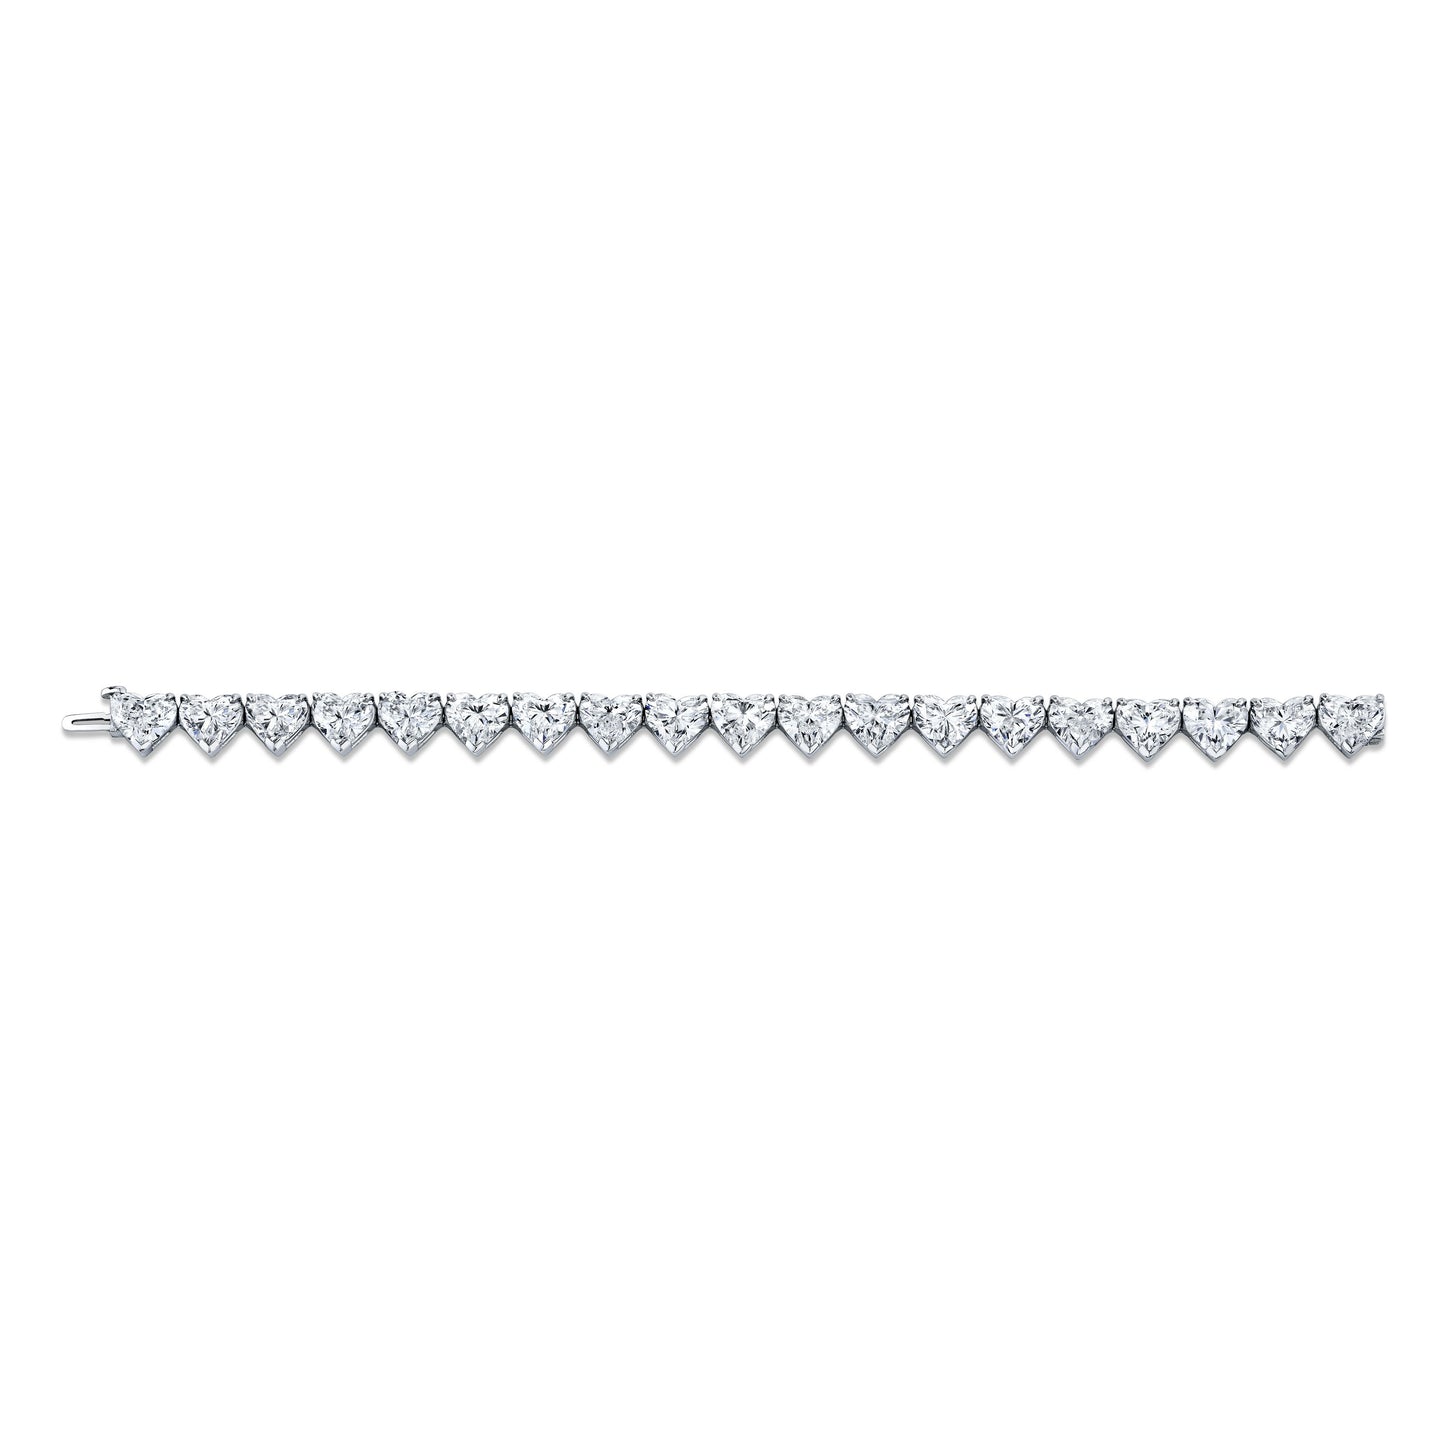 38.98 Carat Heart Shape Diamond Bracelet